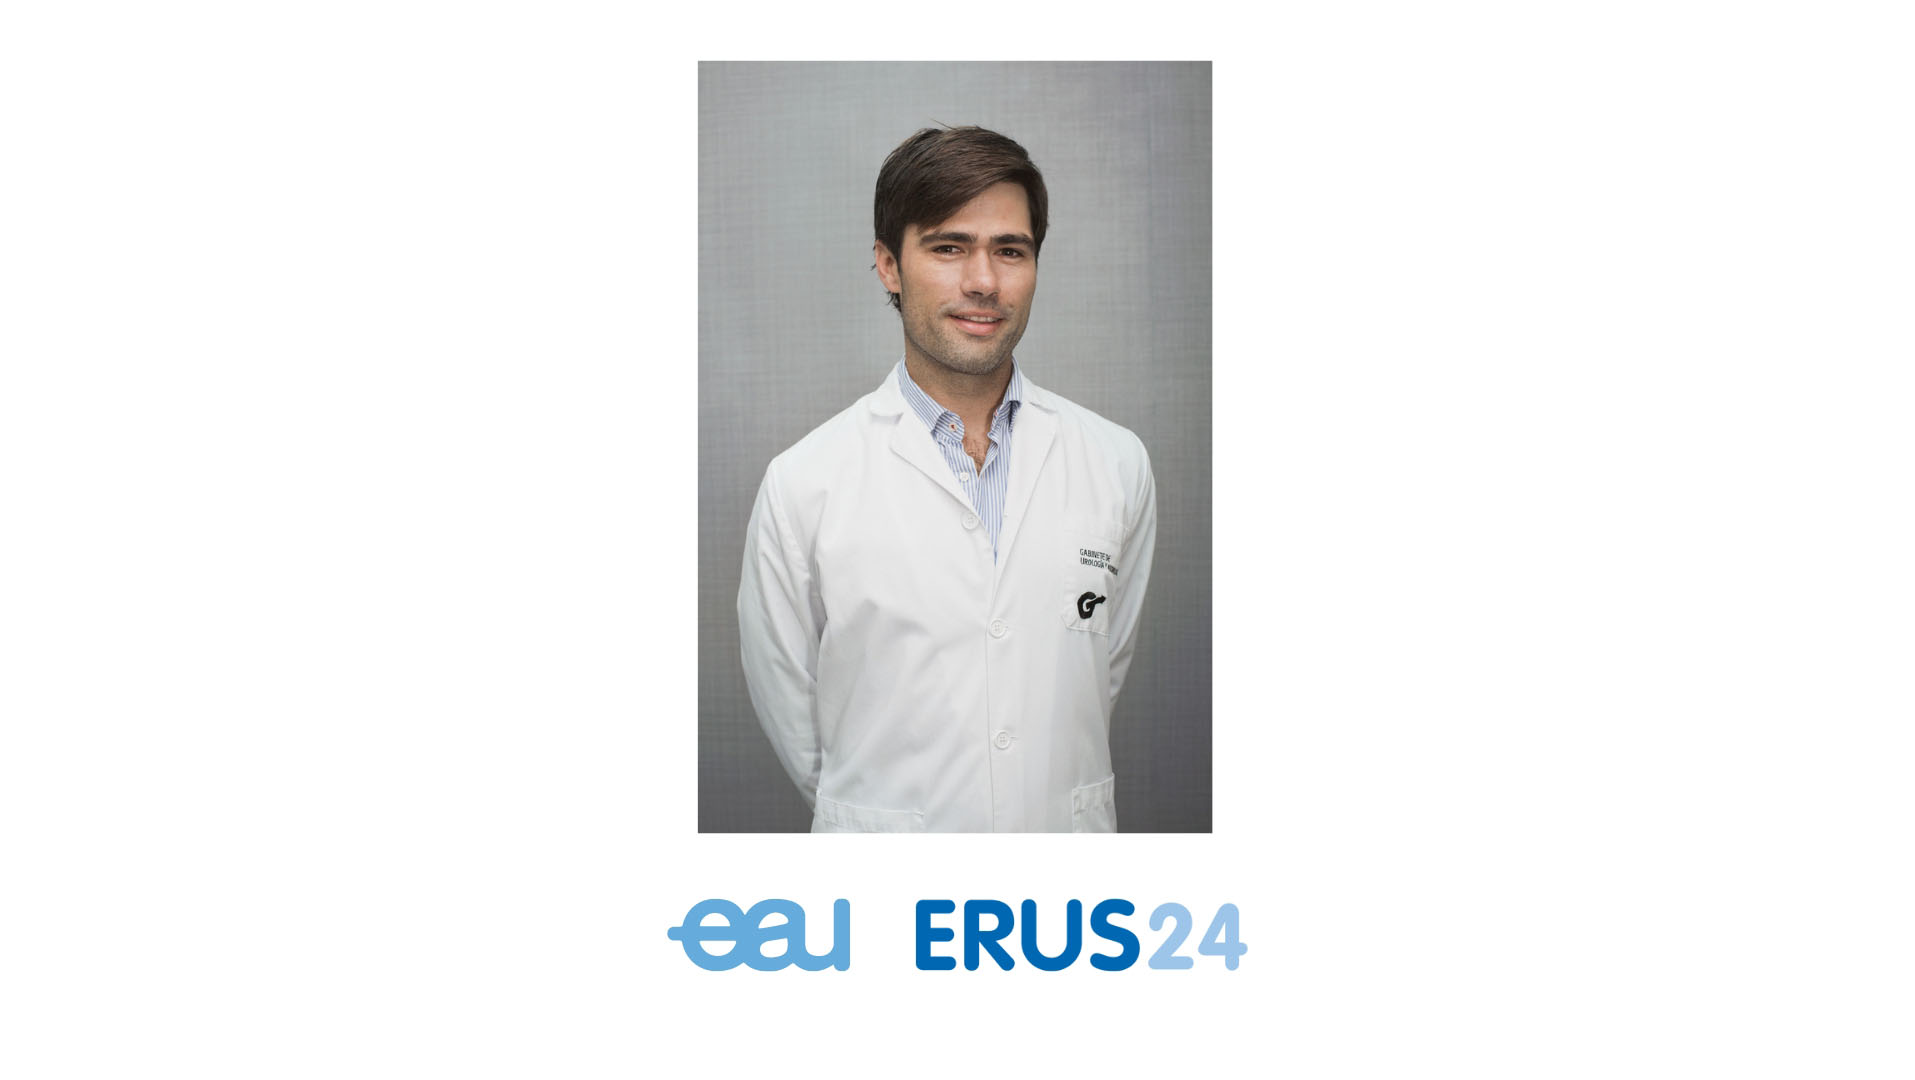 Dr. Pablo Juárez del Dago, Direktor unseres Zentrums, wird zum ERUS Technology Officer der European Association of Urology ernannt.